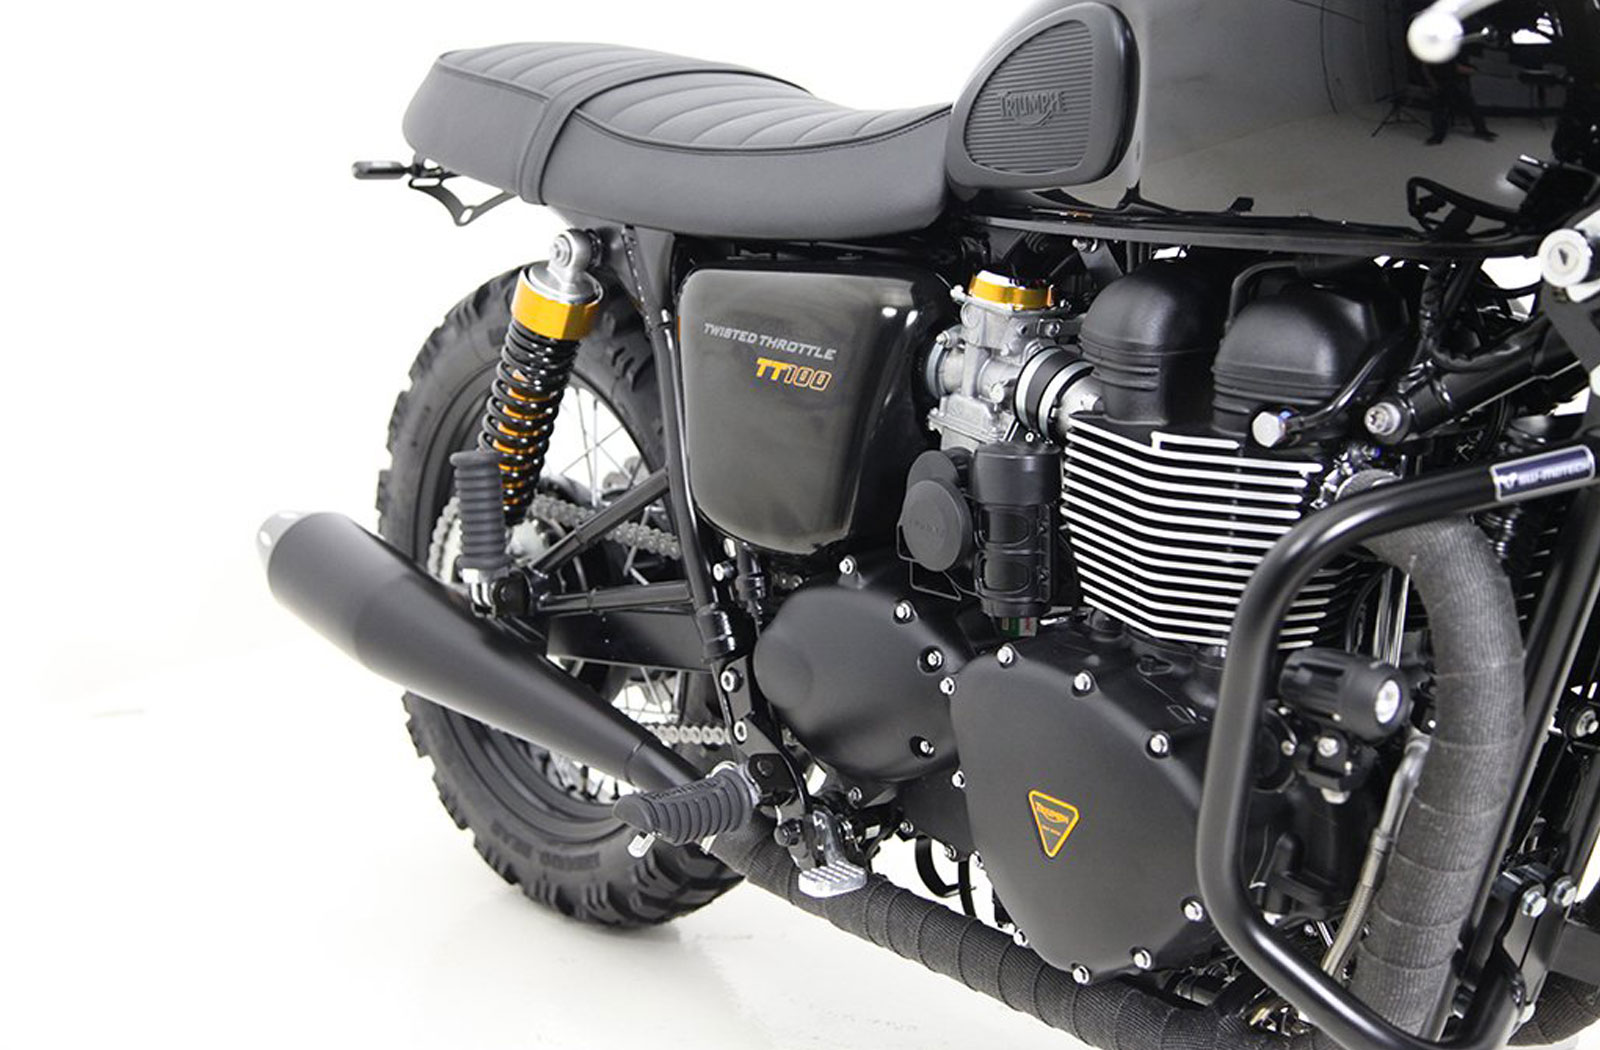 Denali SoundBomb on custom Triumph T100 motorcycle